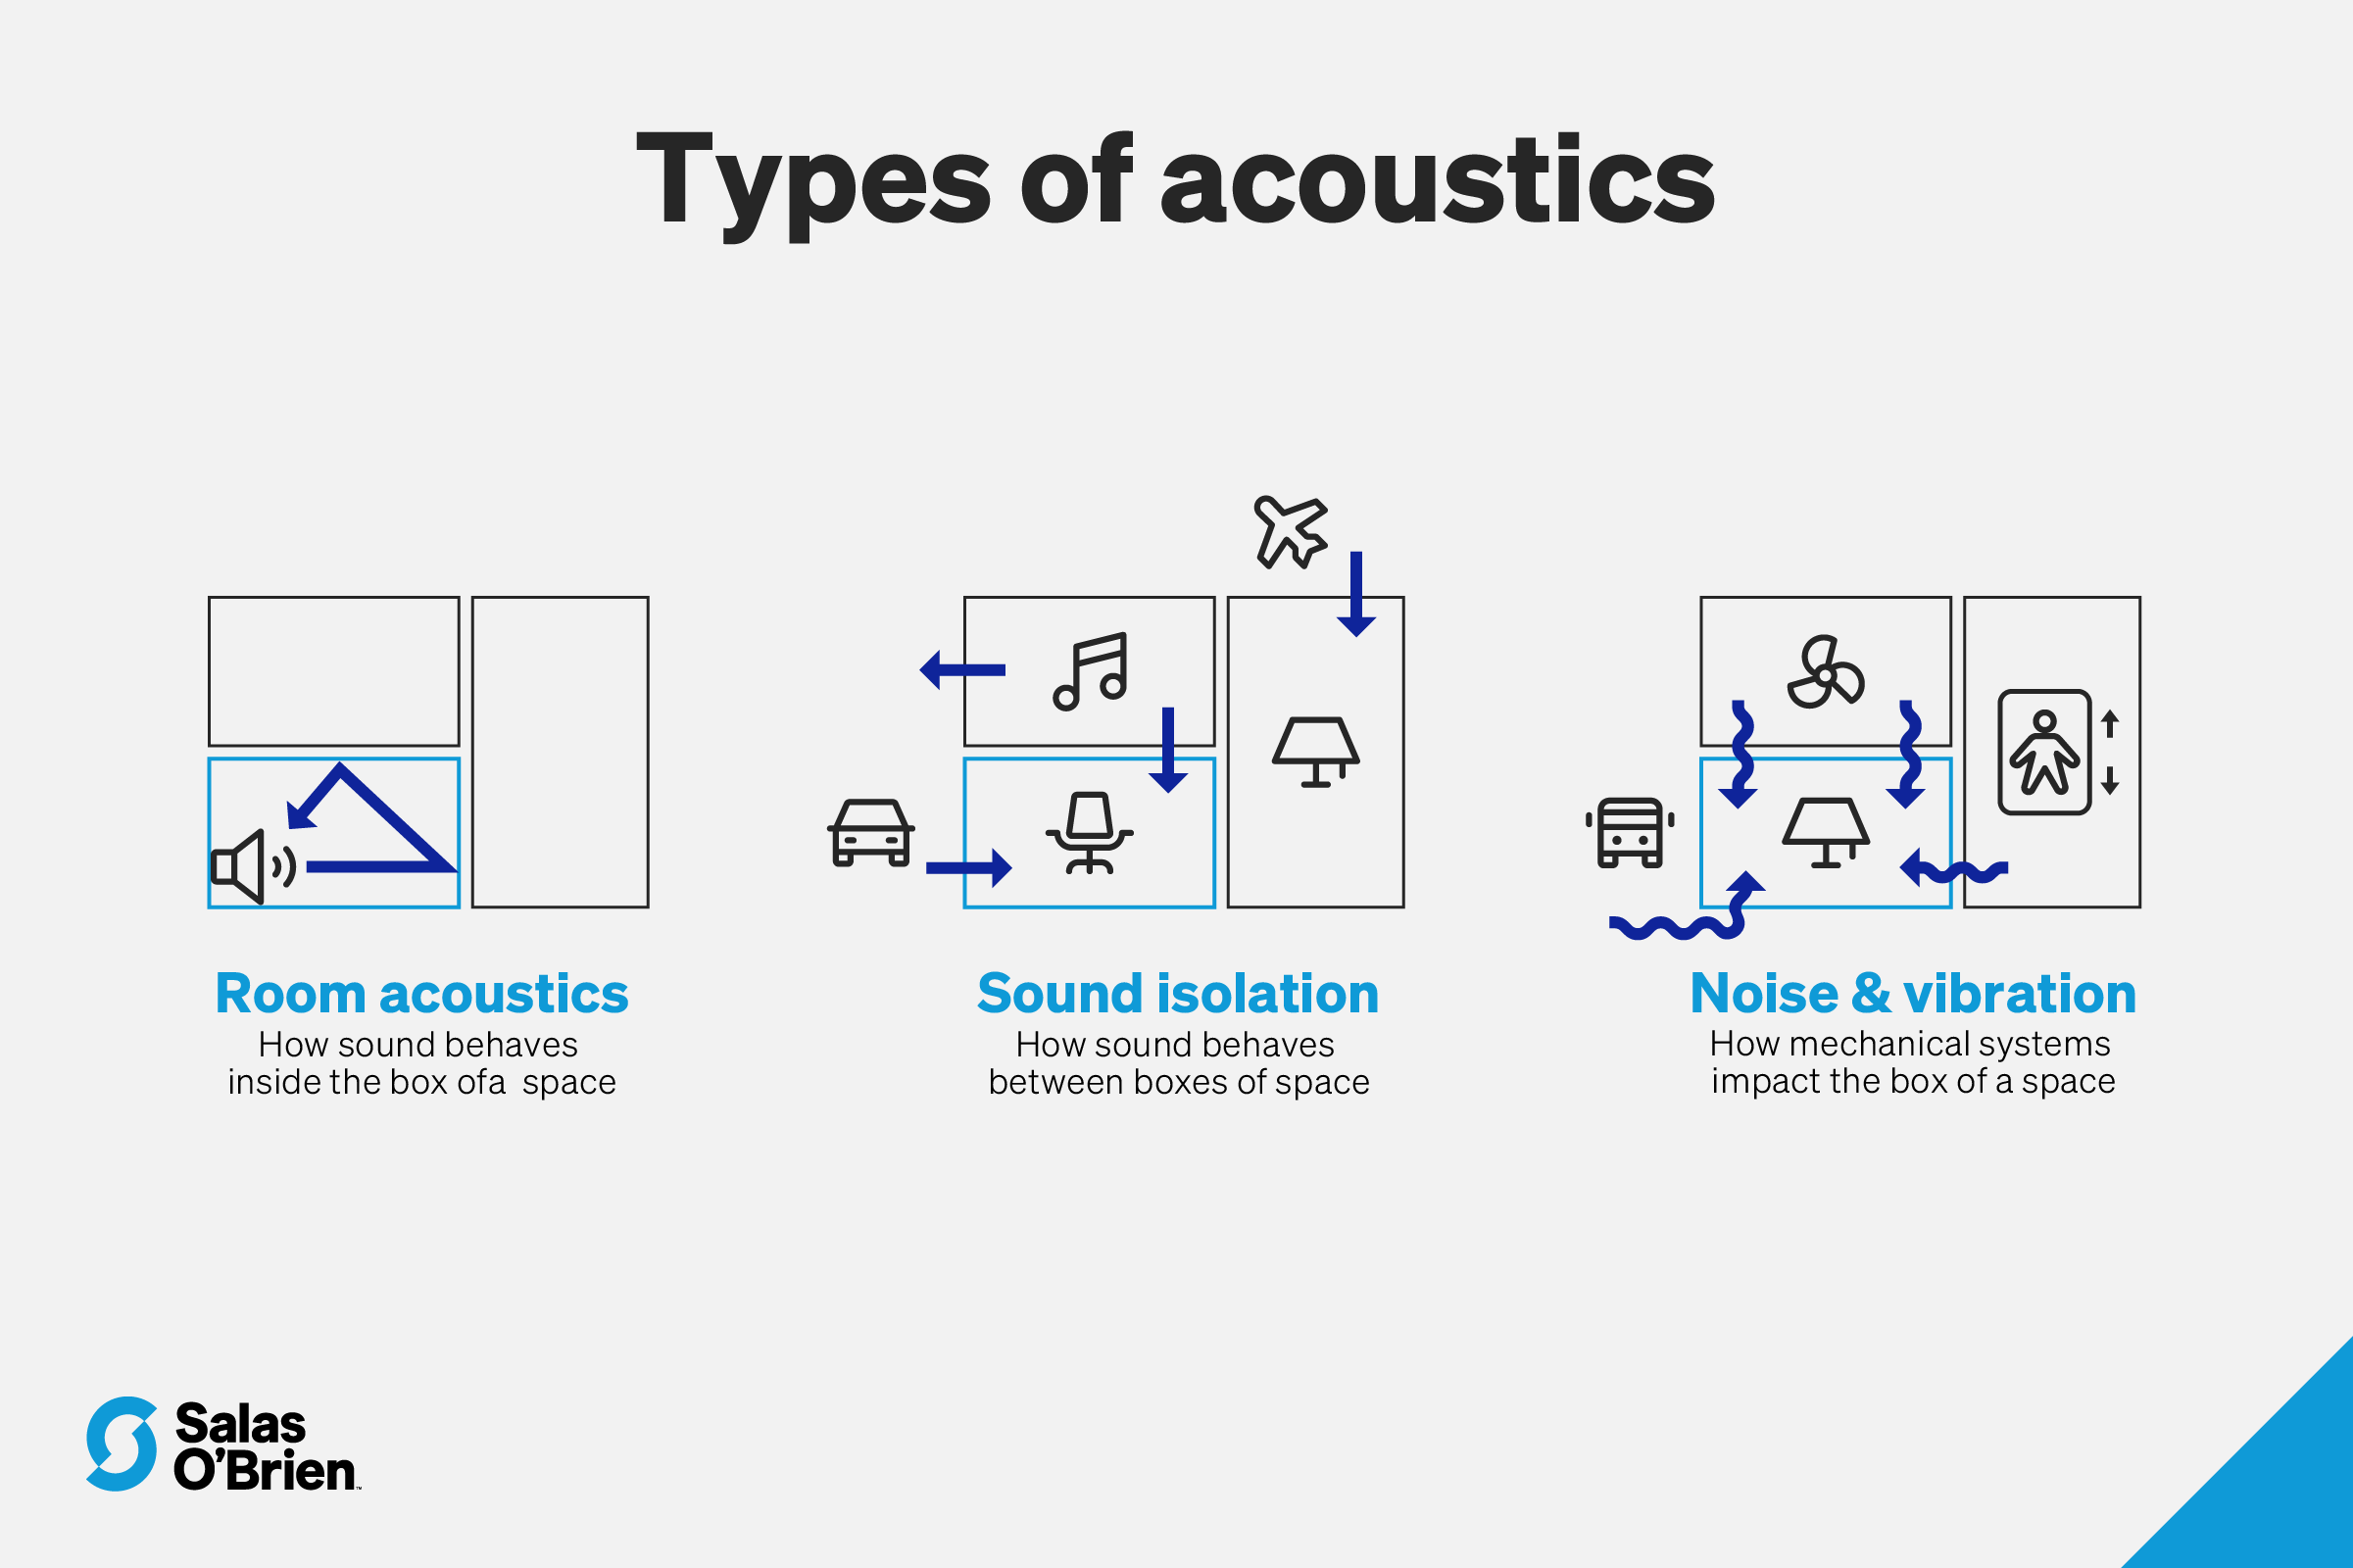 Types of acoustics: room acoustics, sound isolation, noise & vibration control. 